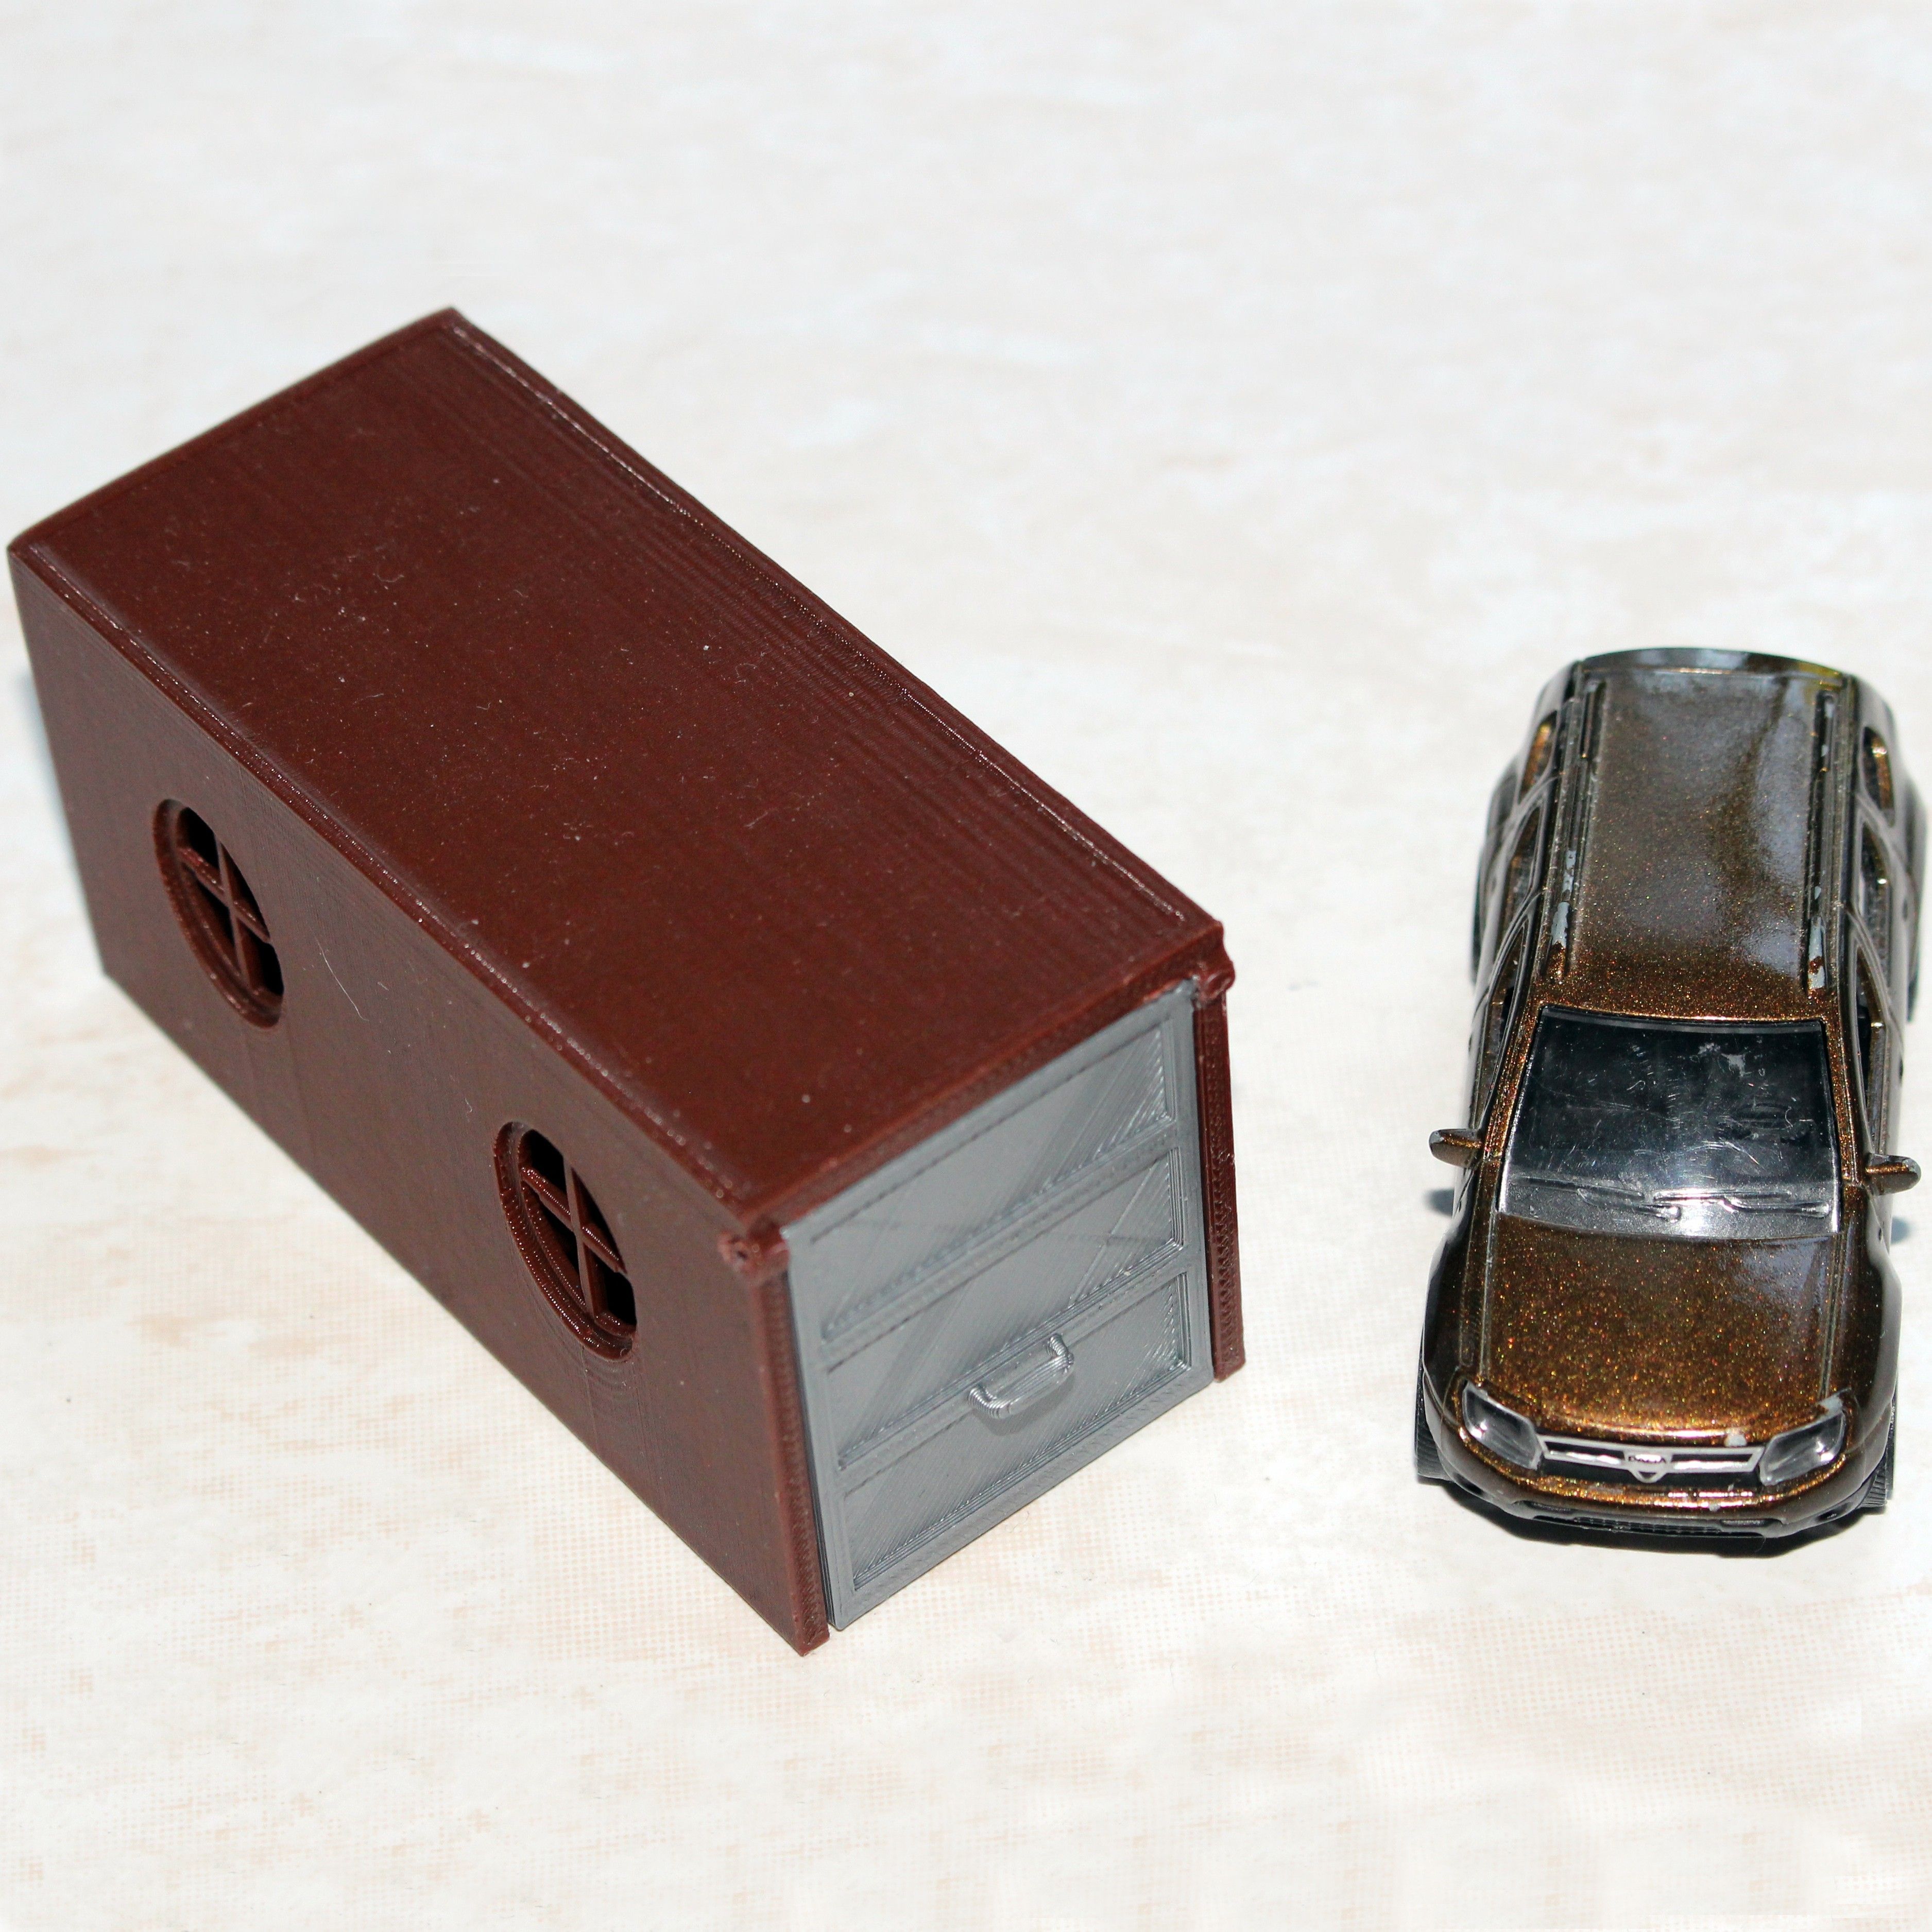 Cars_Boxes_doors_Duster_C3D.jpg Download STL file GARAGE FOR MAJORETTE CAR (SIMPLE) • 3D printing design, HellBoy